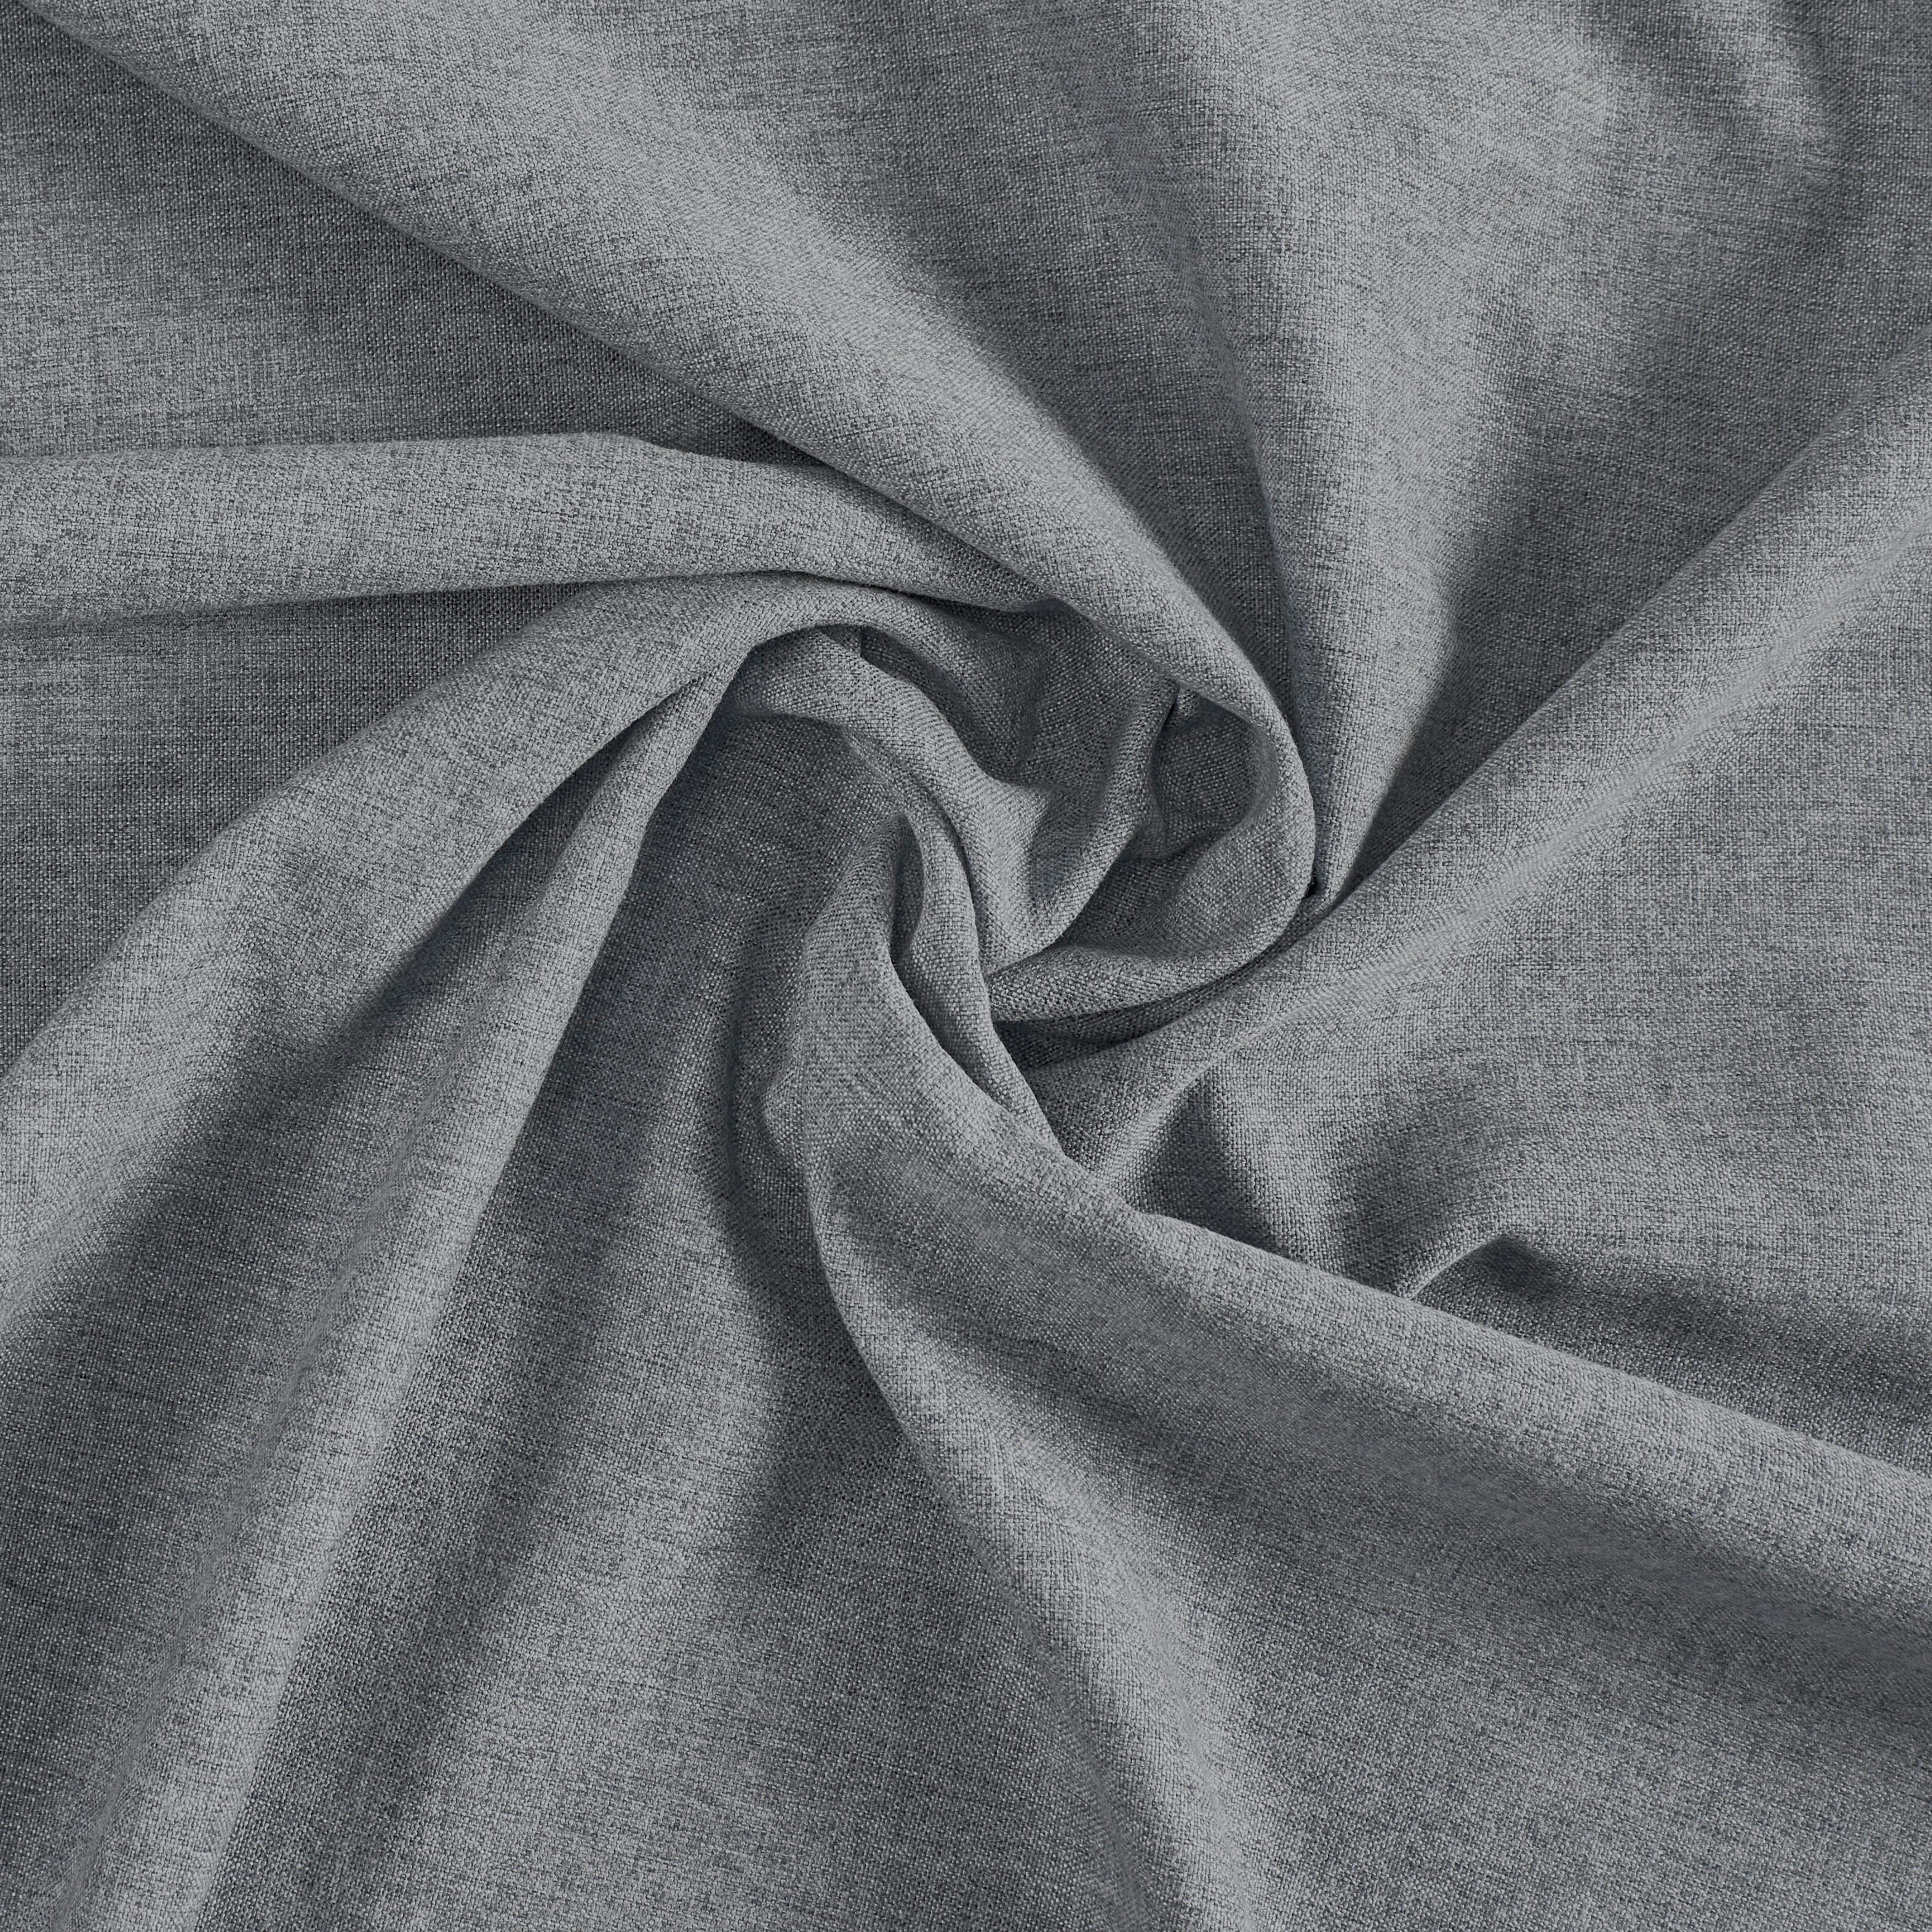 Končana Zavesa Ulrich - siva, tekstil (135/245cm) - Modern Living